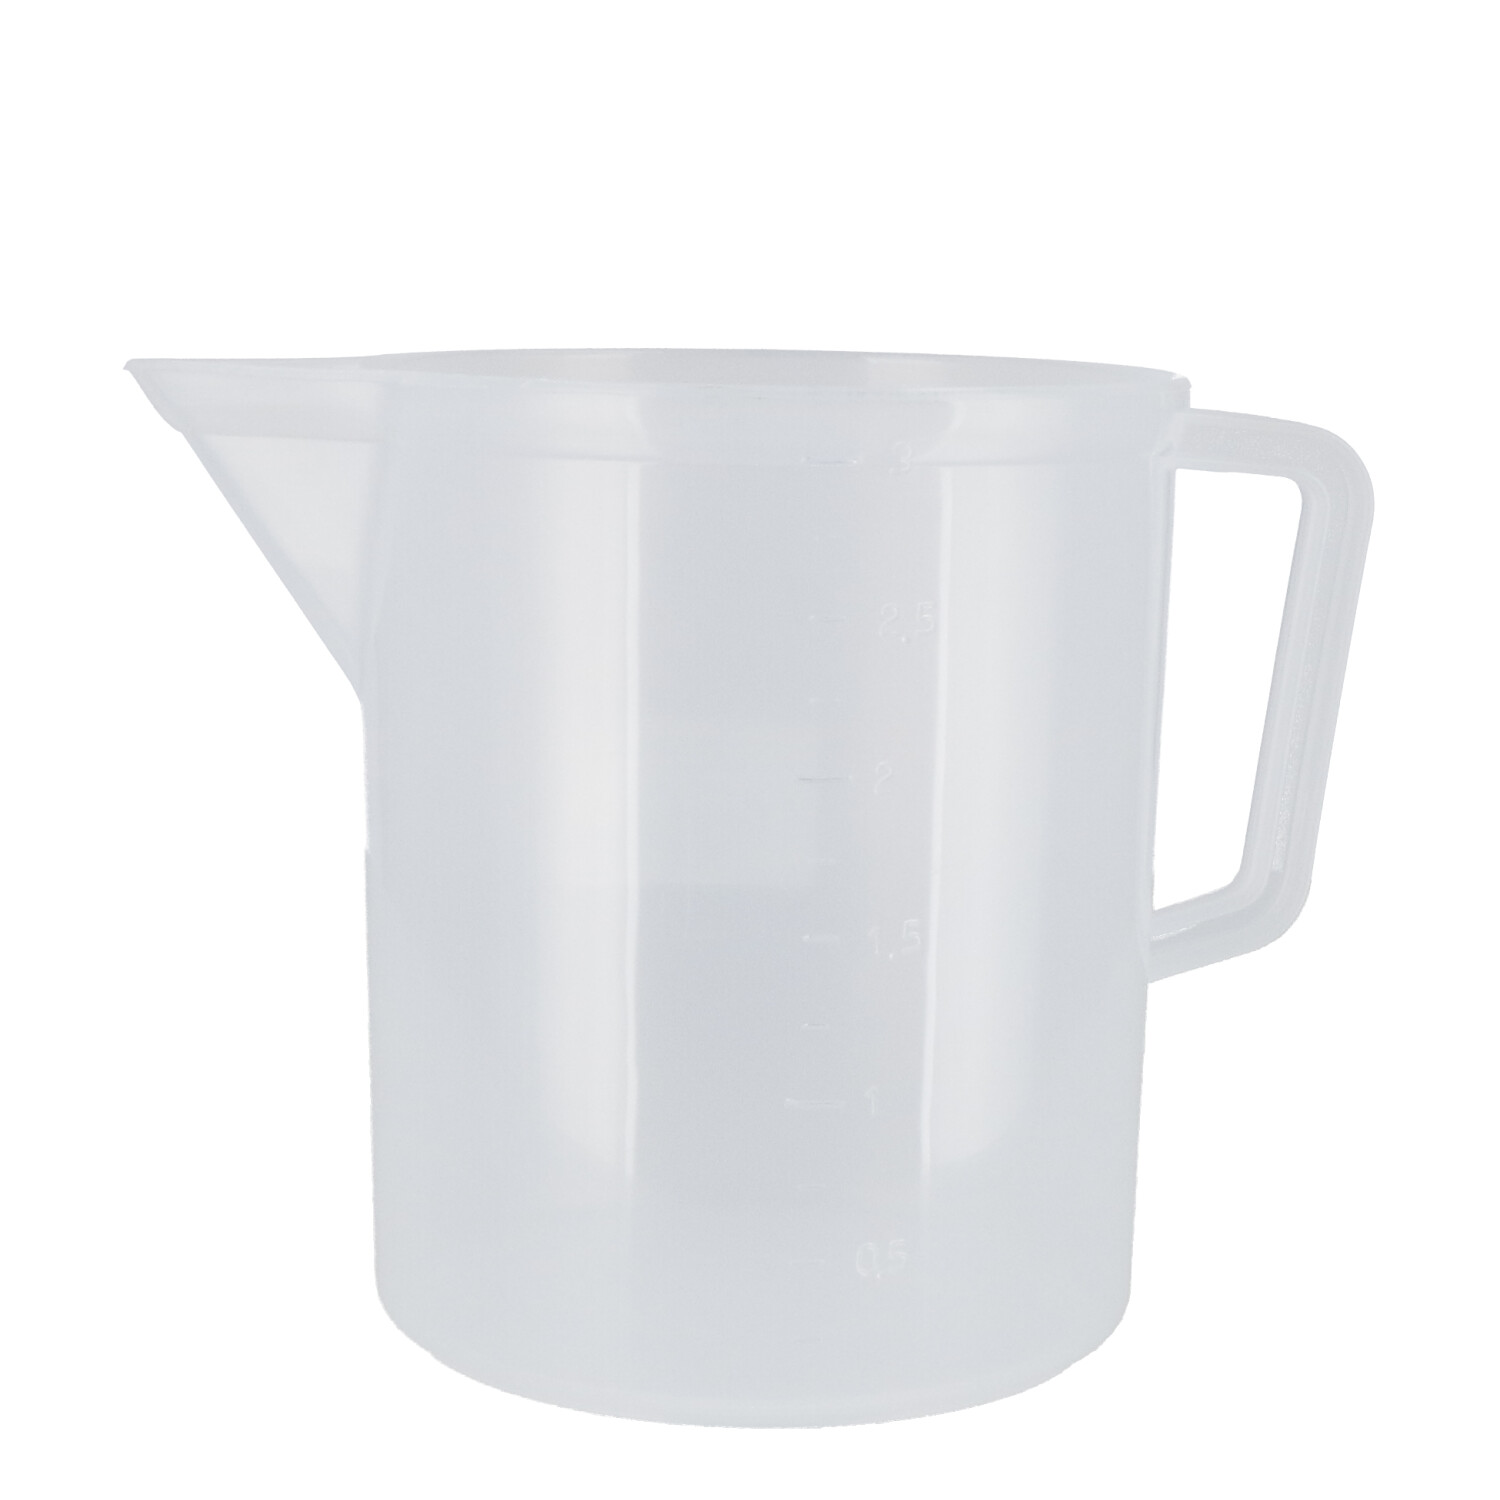 Measuring Cup White Plastic - 3 litre